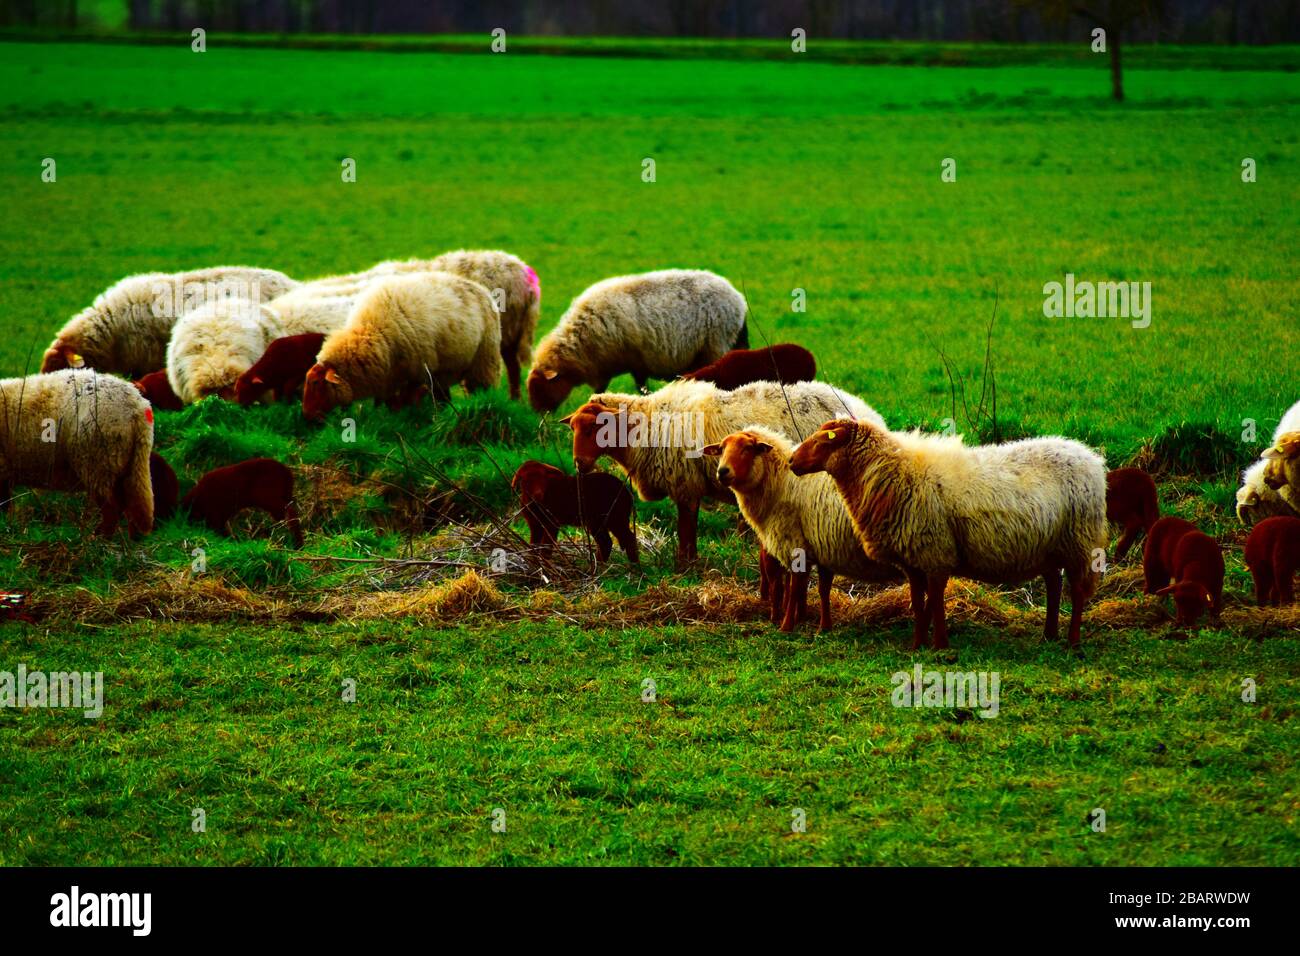 Sheep in green fields Stock Photo